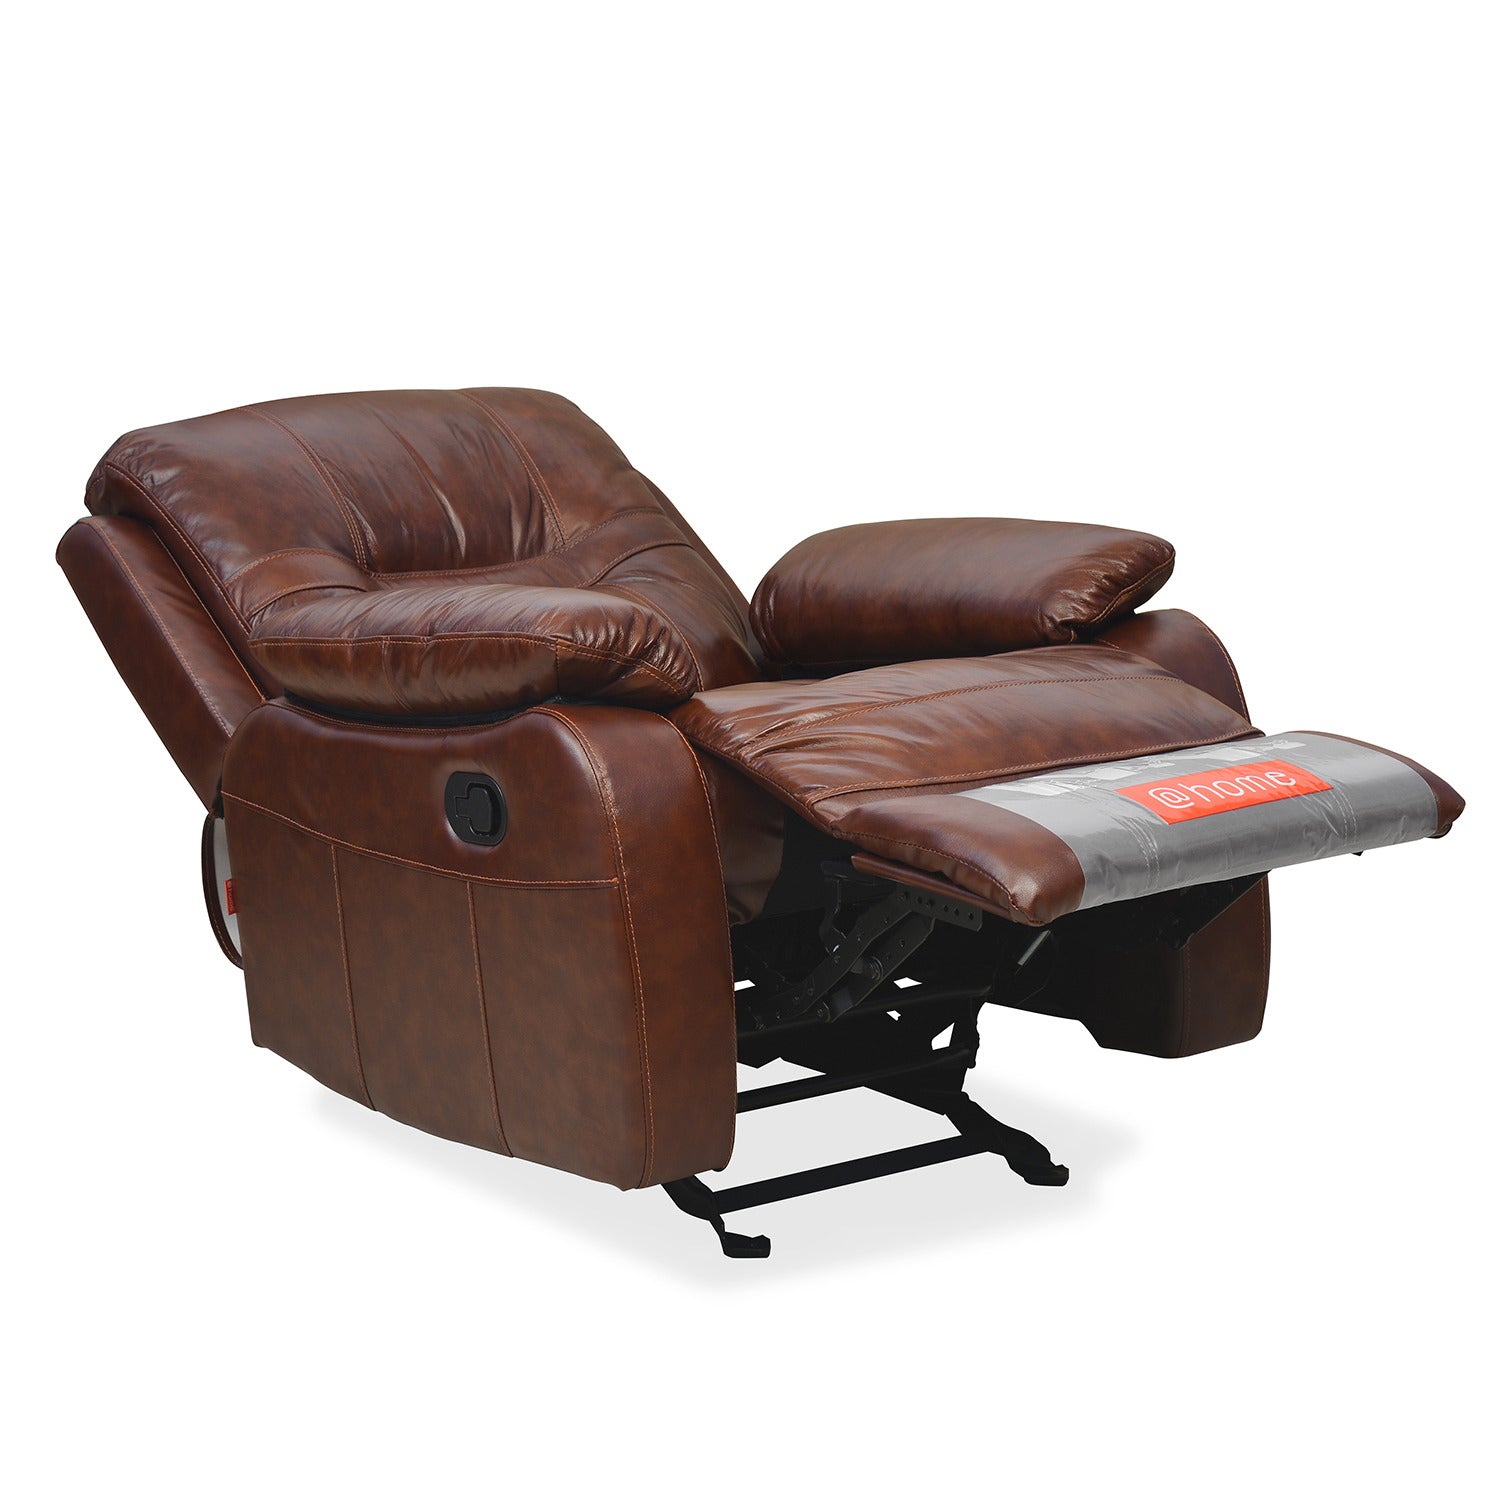 Wilson 1 Seater Sofa with Rocker Recliner (Caramel)